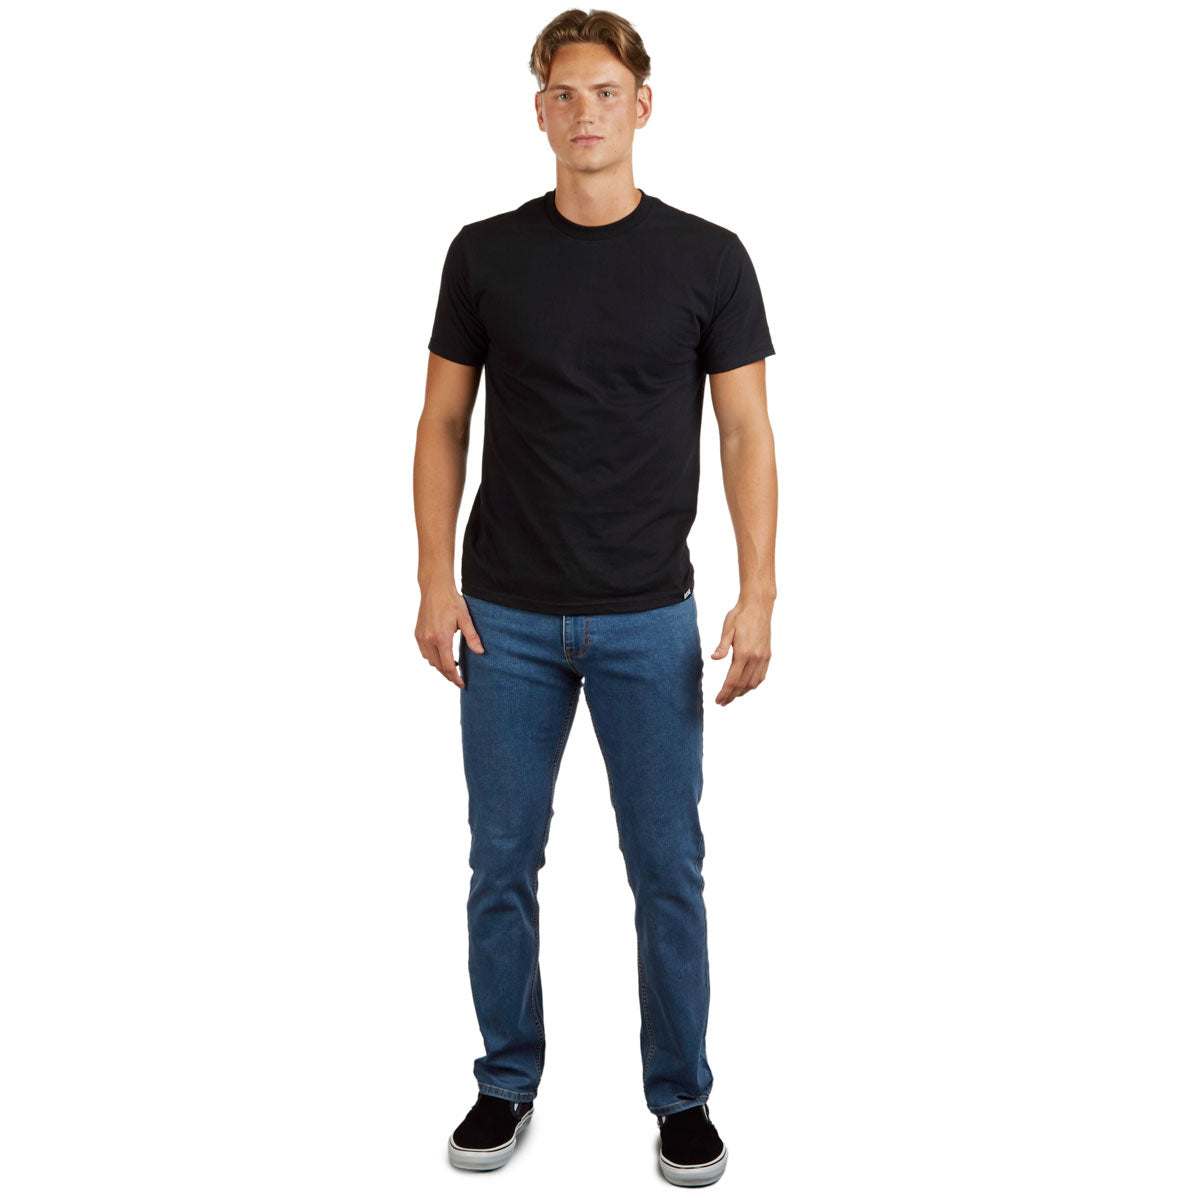 CCS Standard Plus Slim Denim Jeans - New Rinse image 2